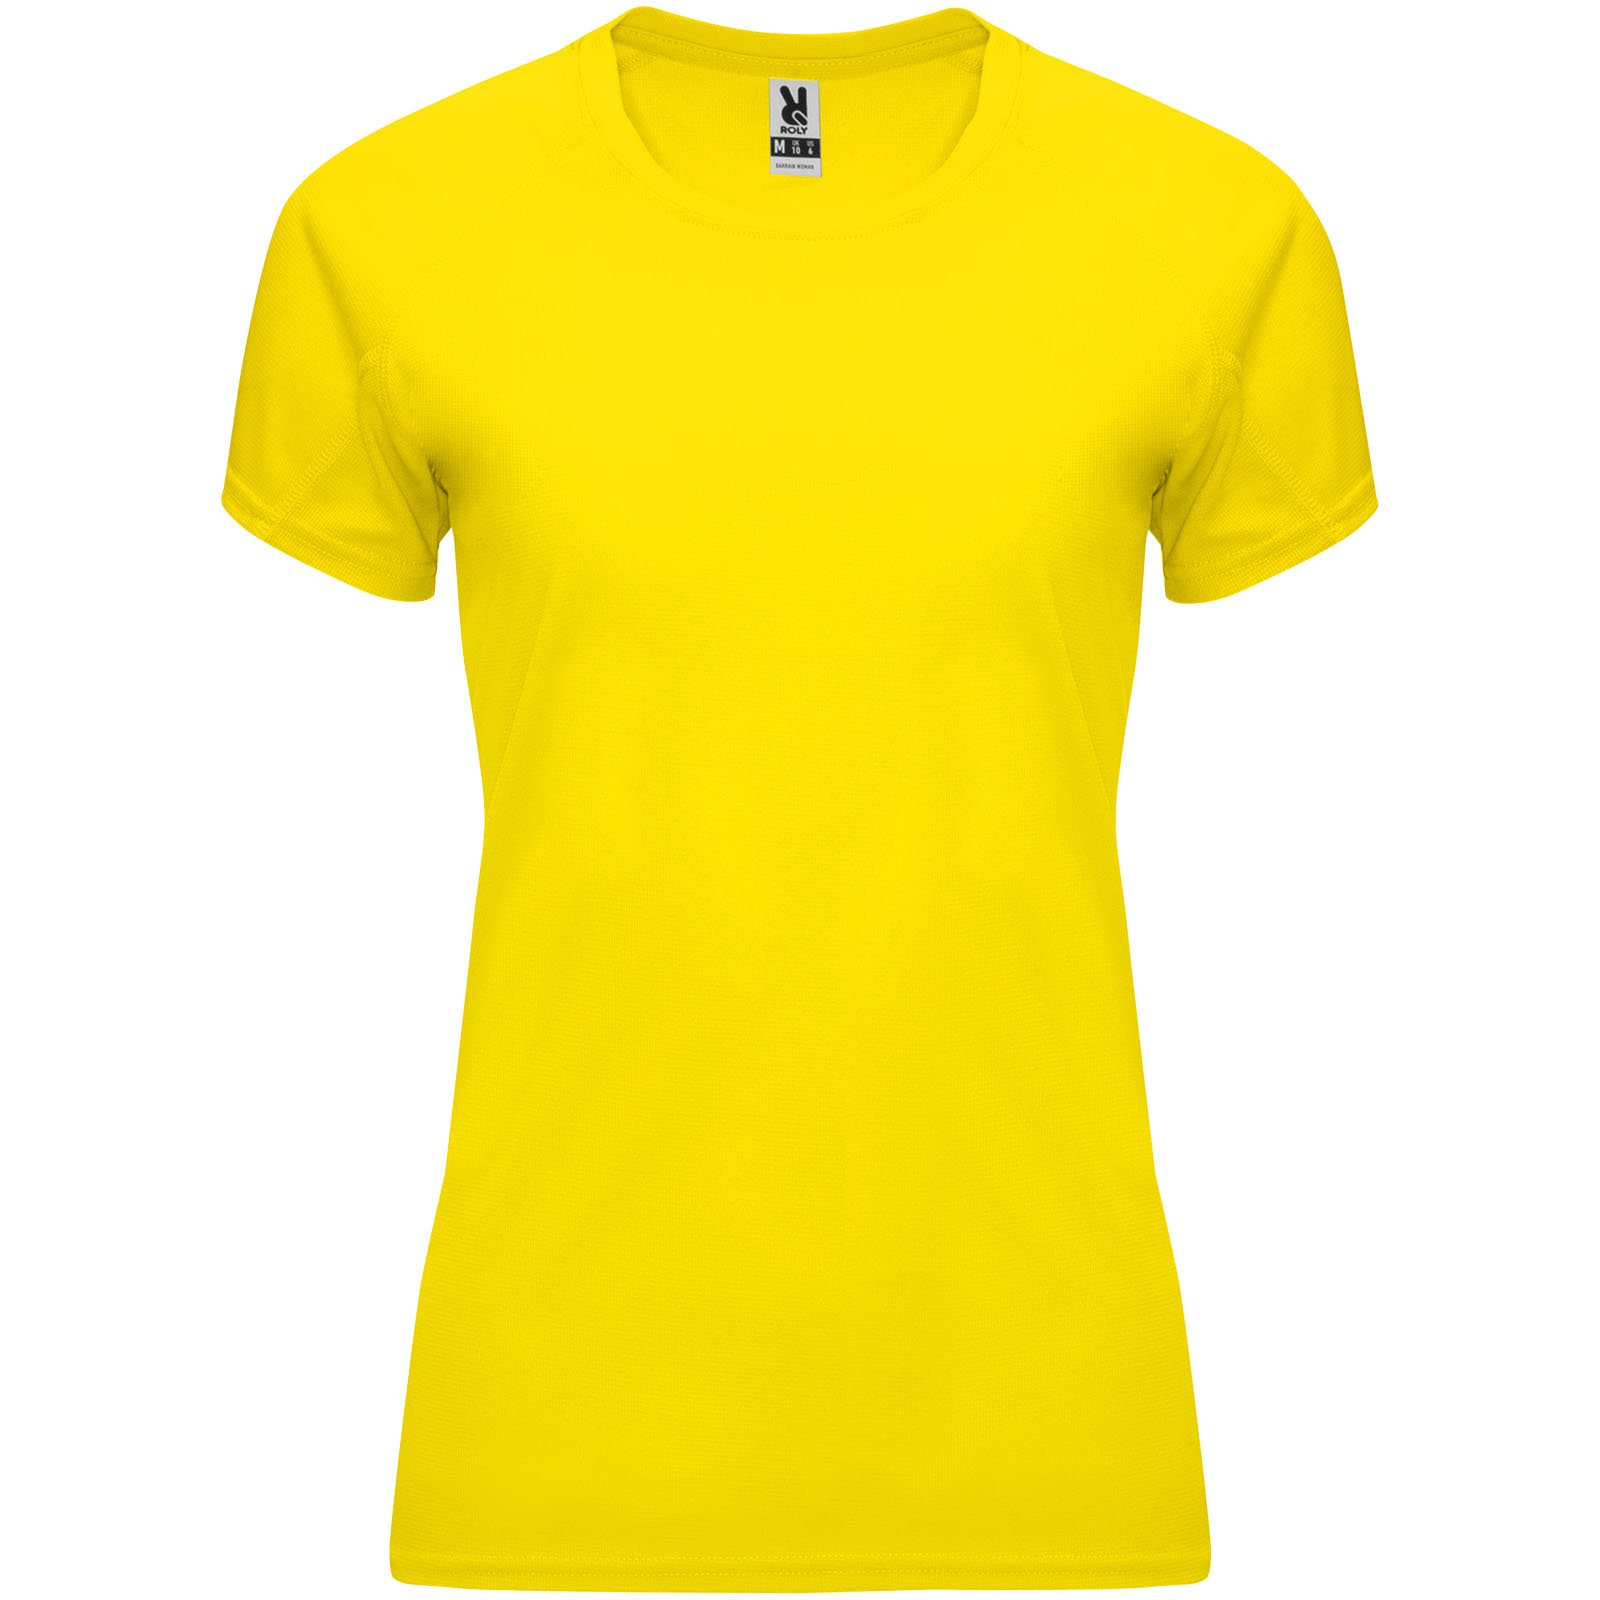 Advertising T-shirts - Bahrain short sleeve women's sports t-shirt - 0